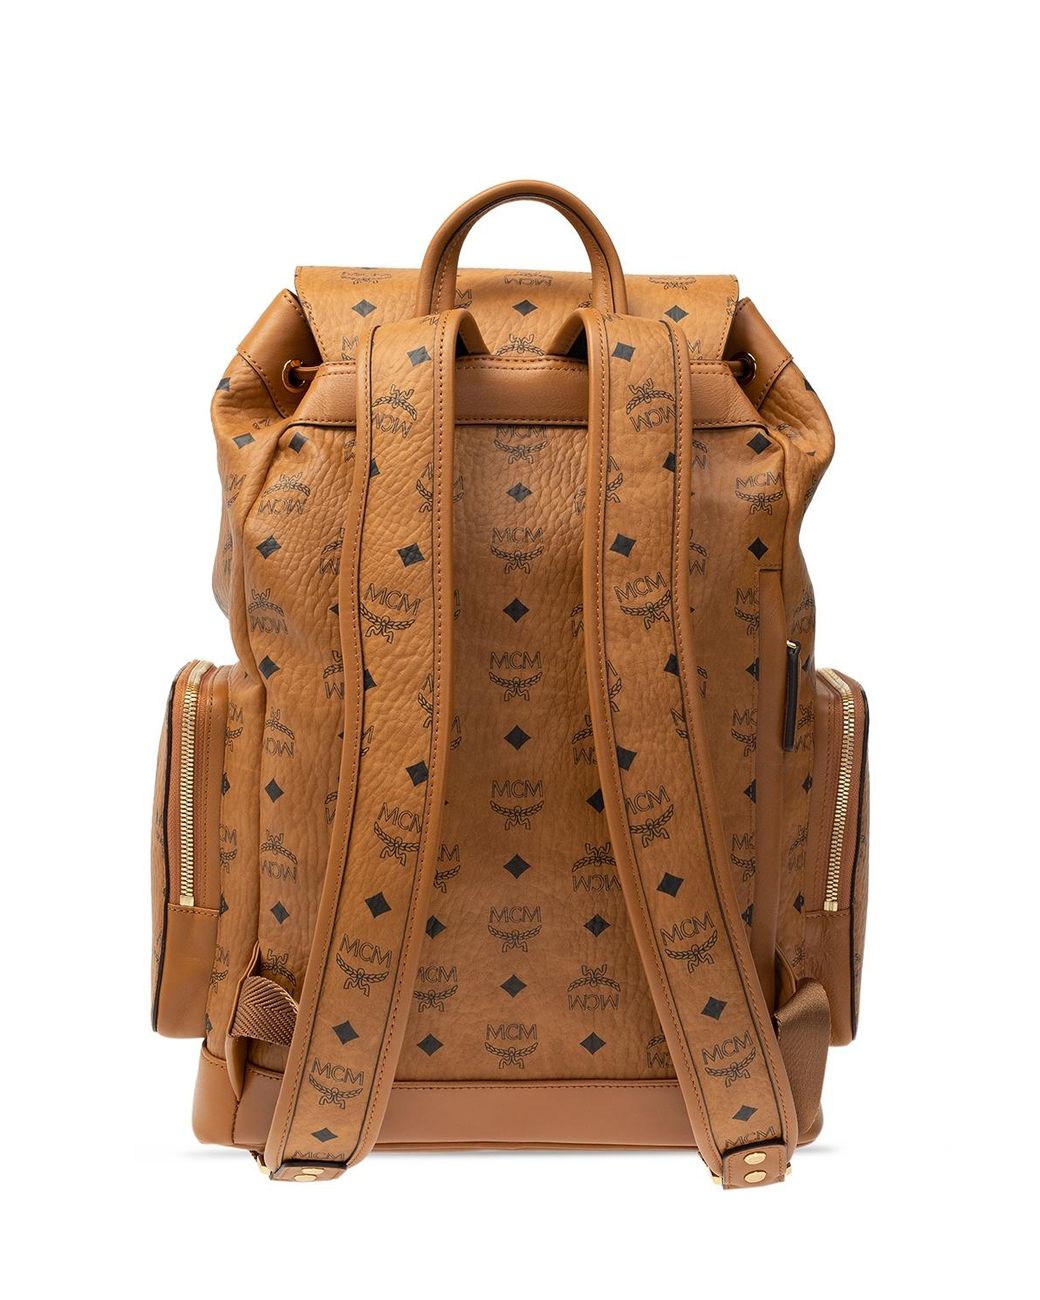 MCM Logogram Heritage Line Cognac Brown Leather Backpack - clothing &  accessories - by owner - apparel sale - craigslist